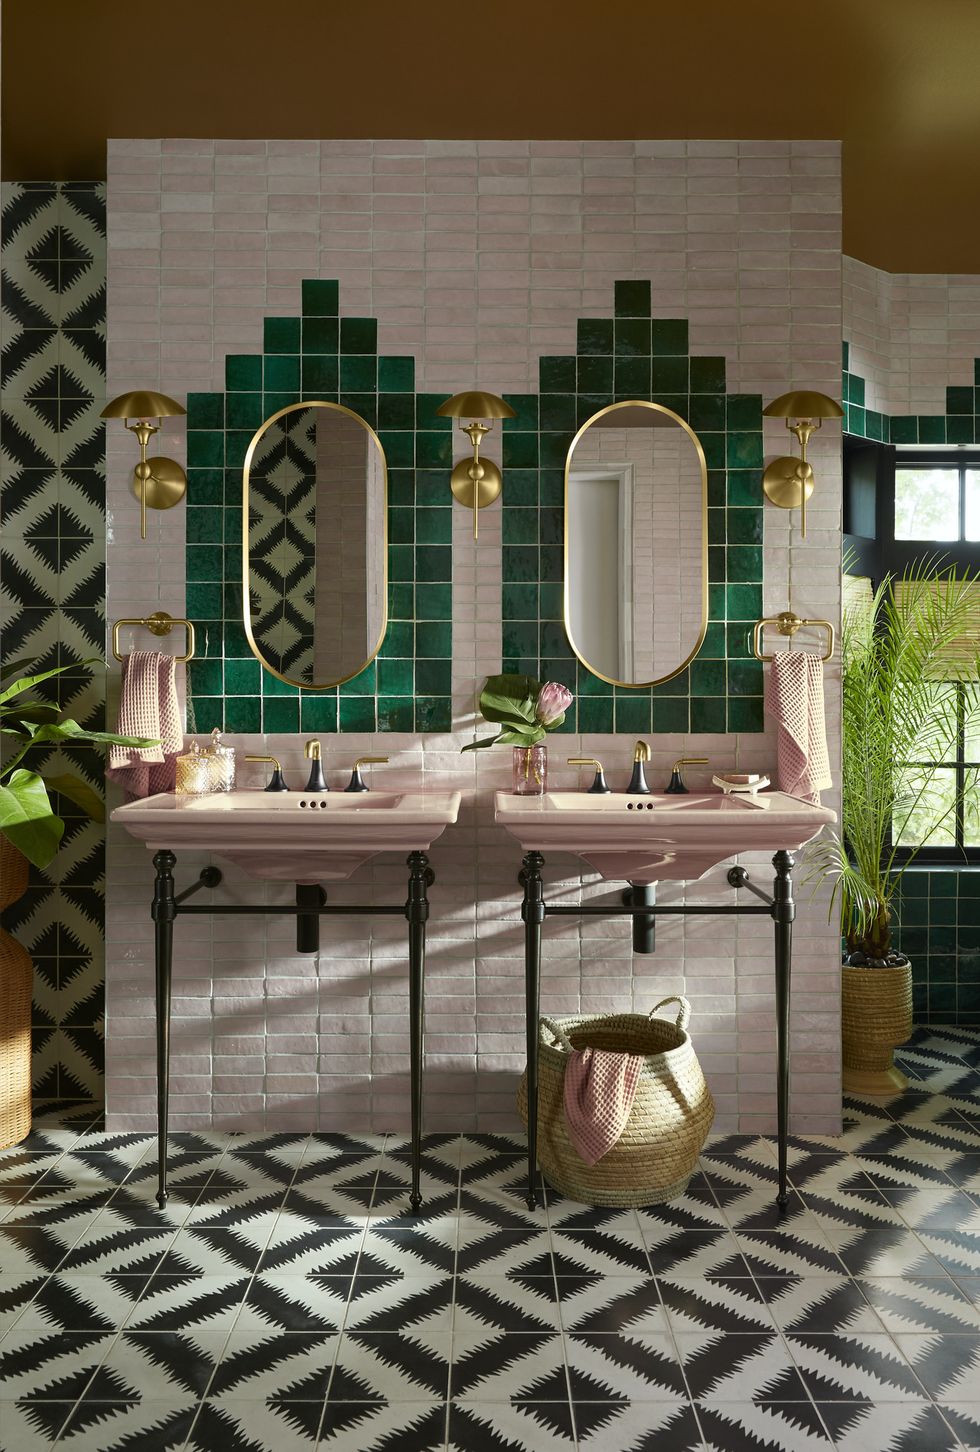 a bathroom with a peach tub sink and mirrors